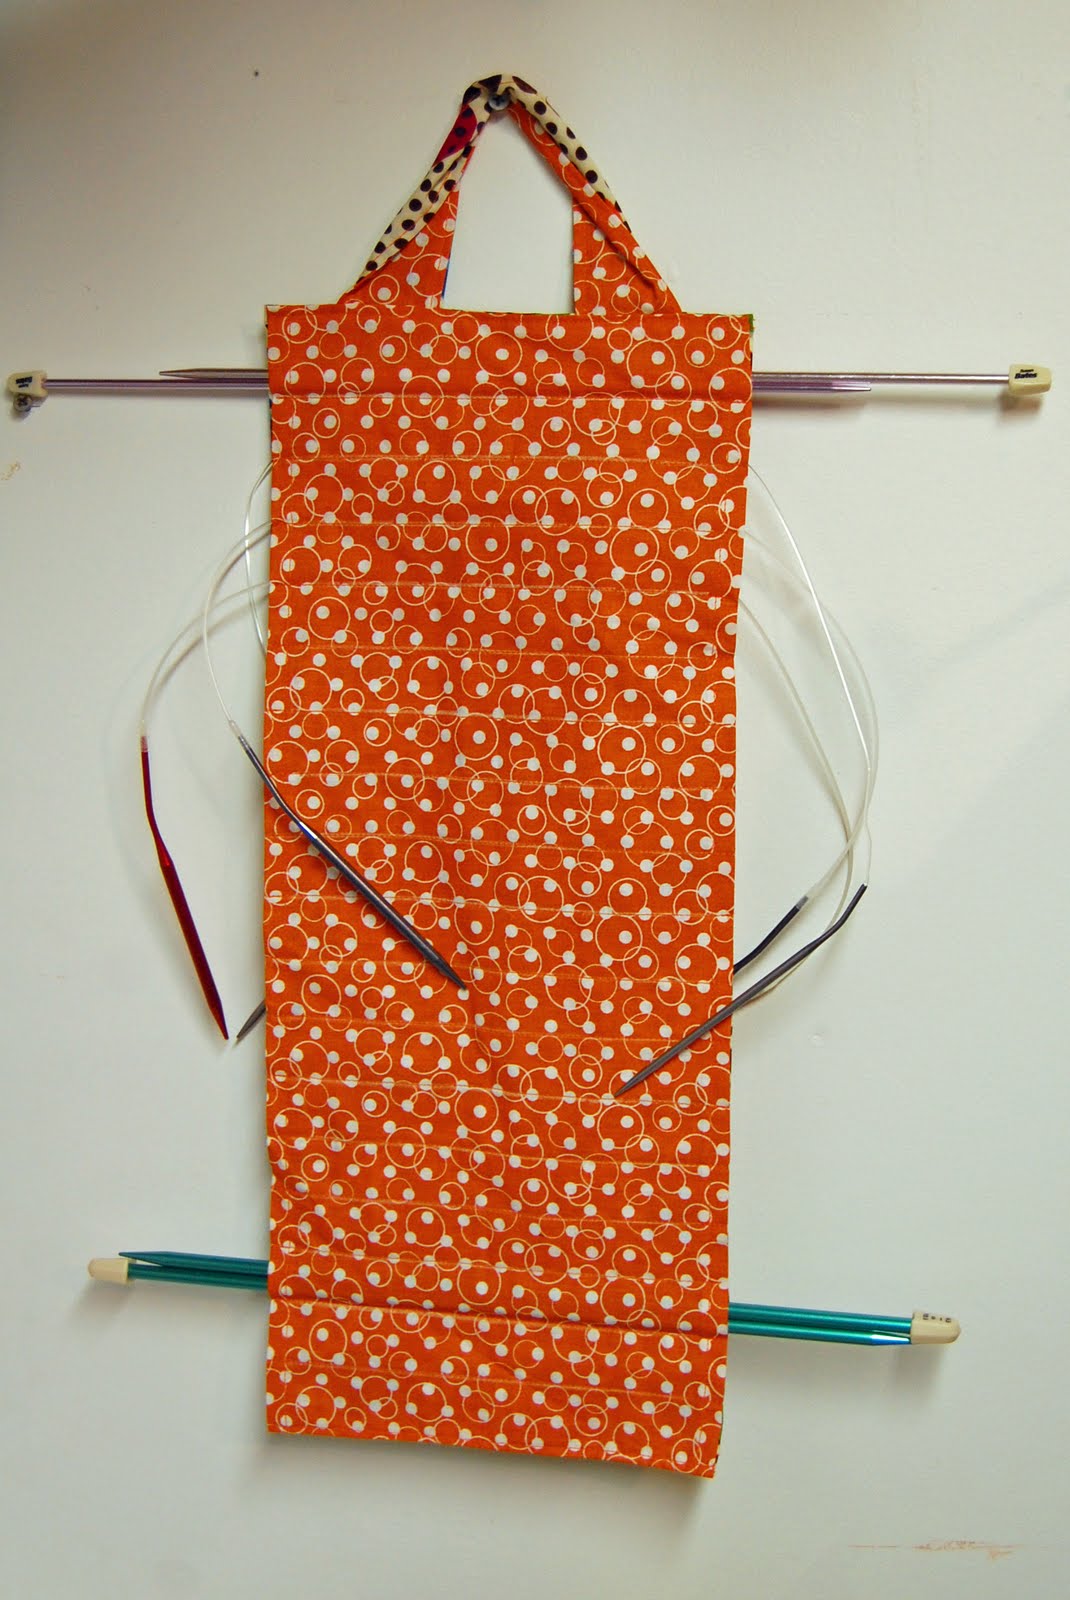 Pin and Paper Hanging Circular Knitting Needle Holder a tutorial